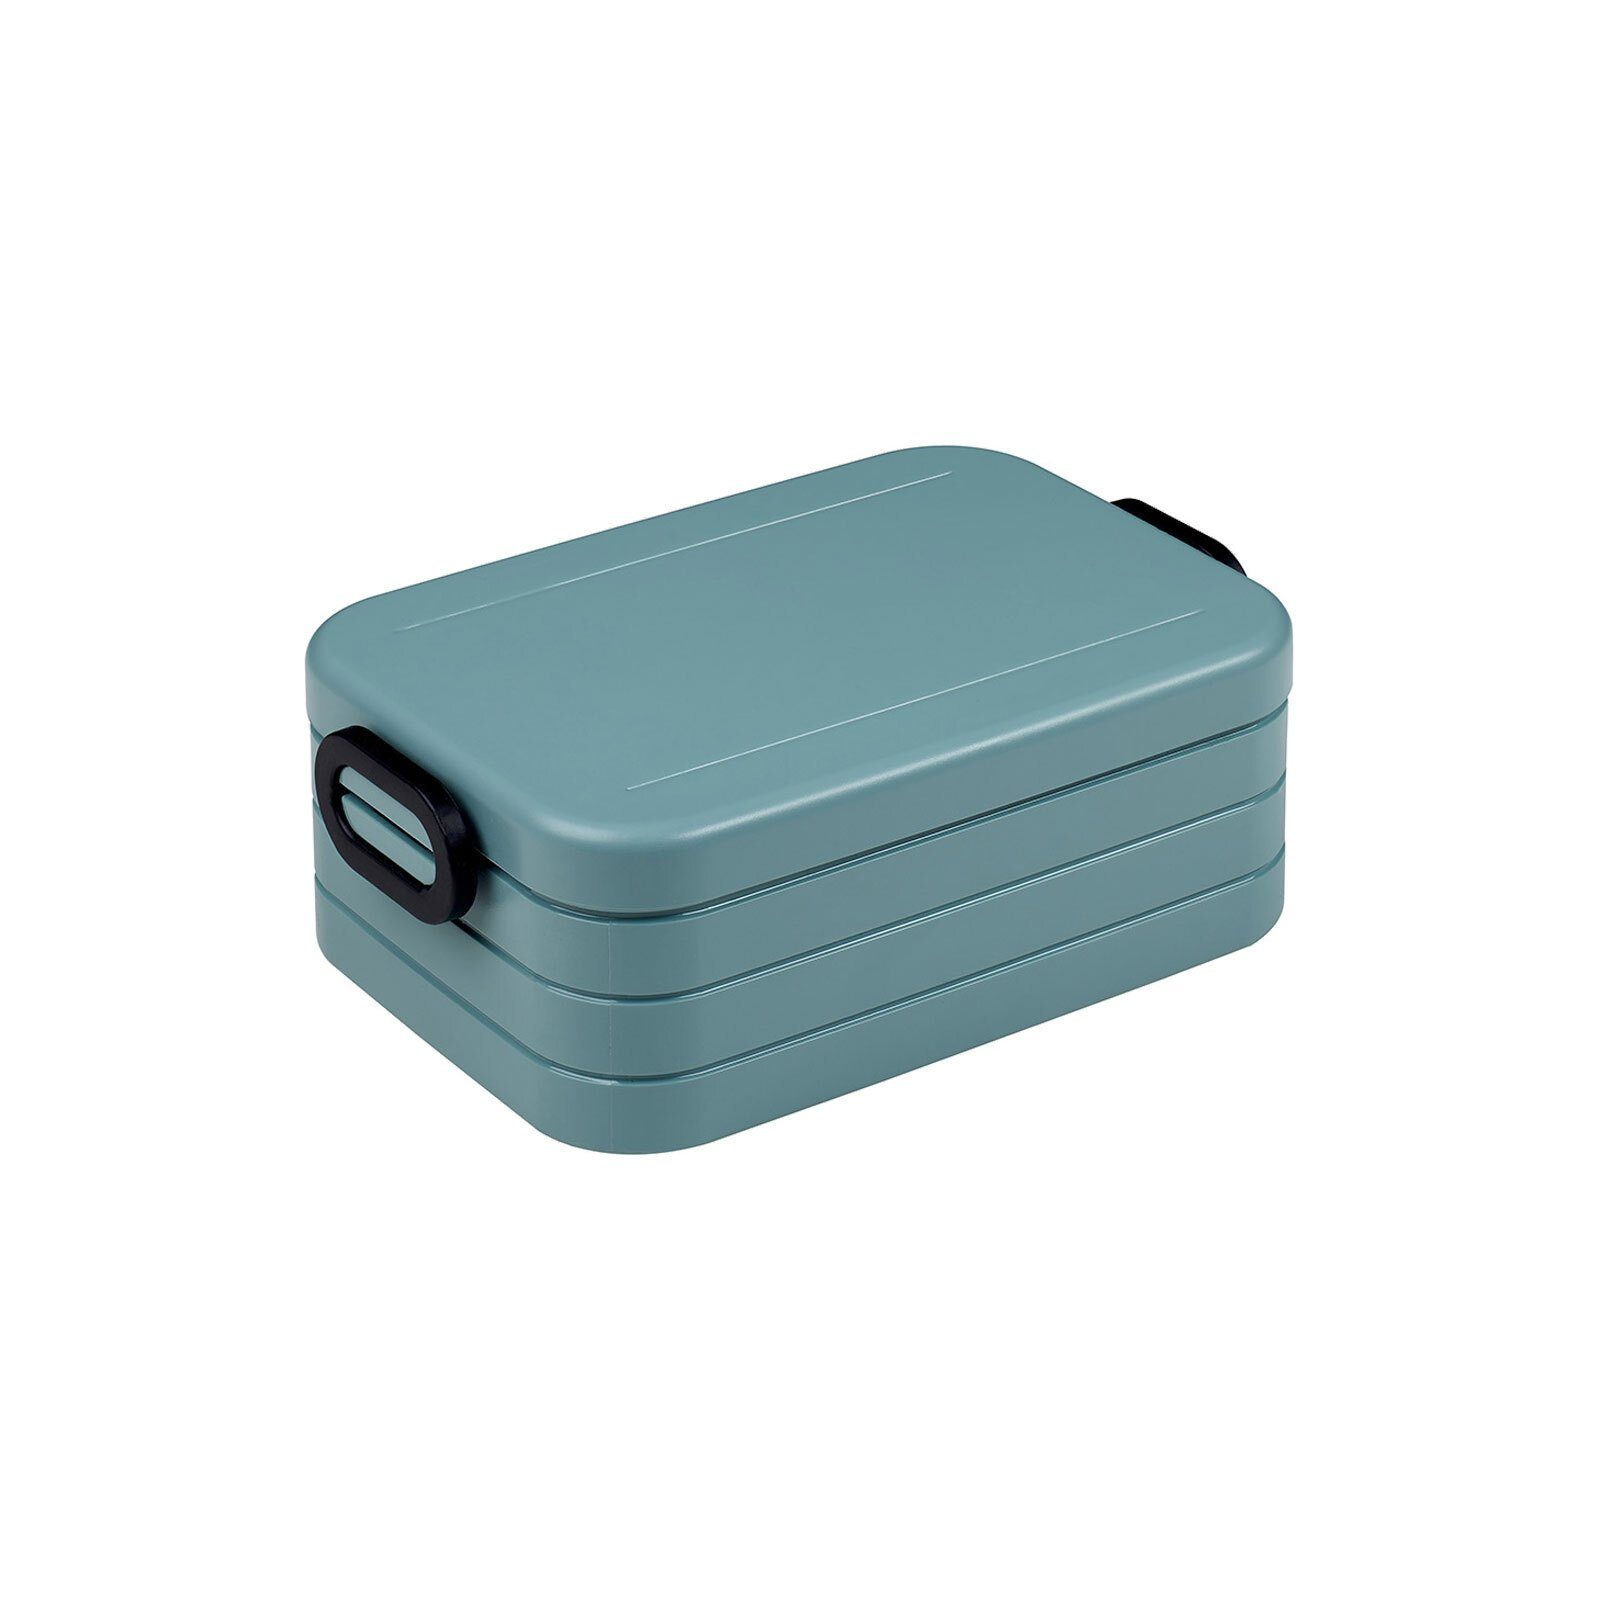 Lunchbox (1-tlg), Midi Green Take Material-Mix, Spülmaschinengeeignet a 900 Nordic Mepal ml, Bento-Lunchbox Break